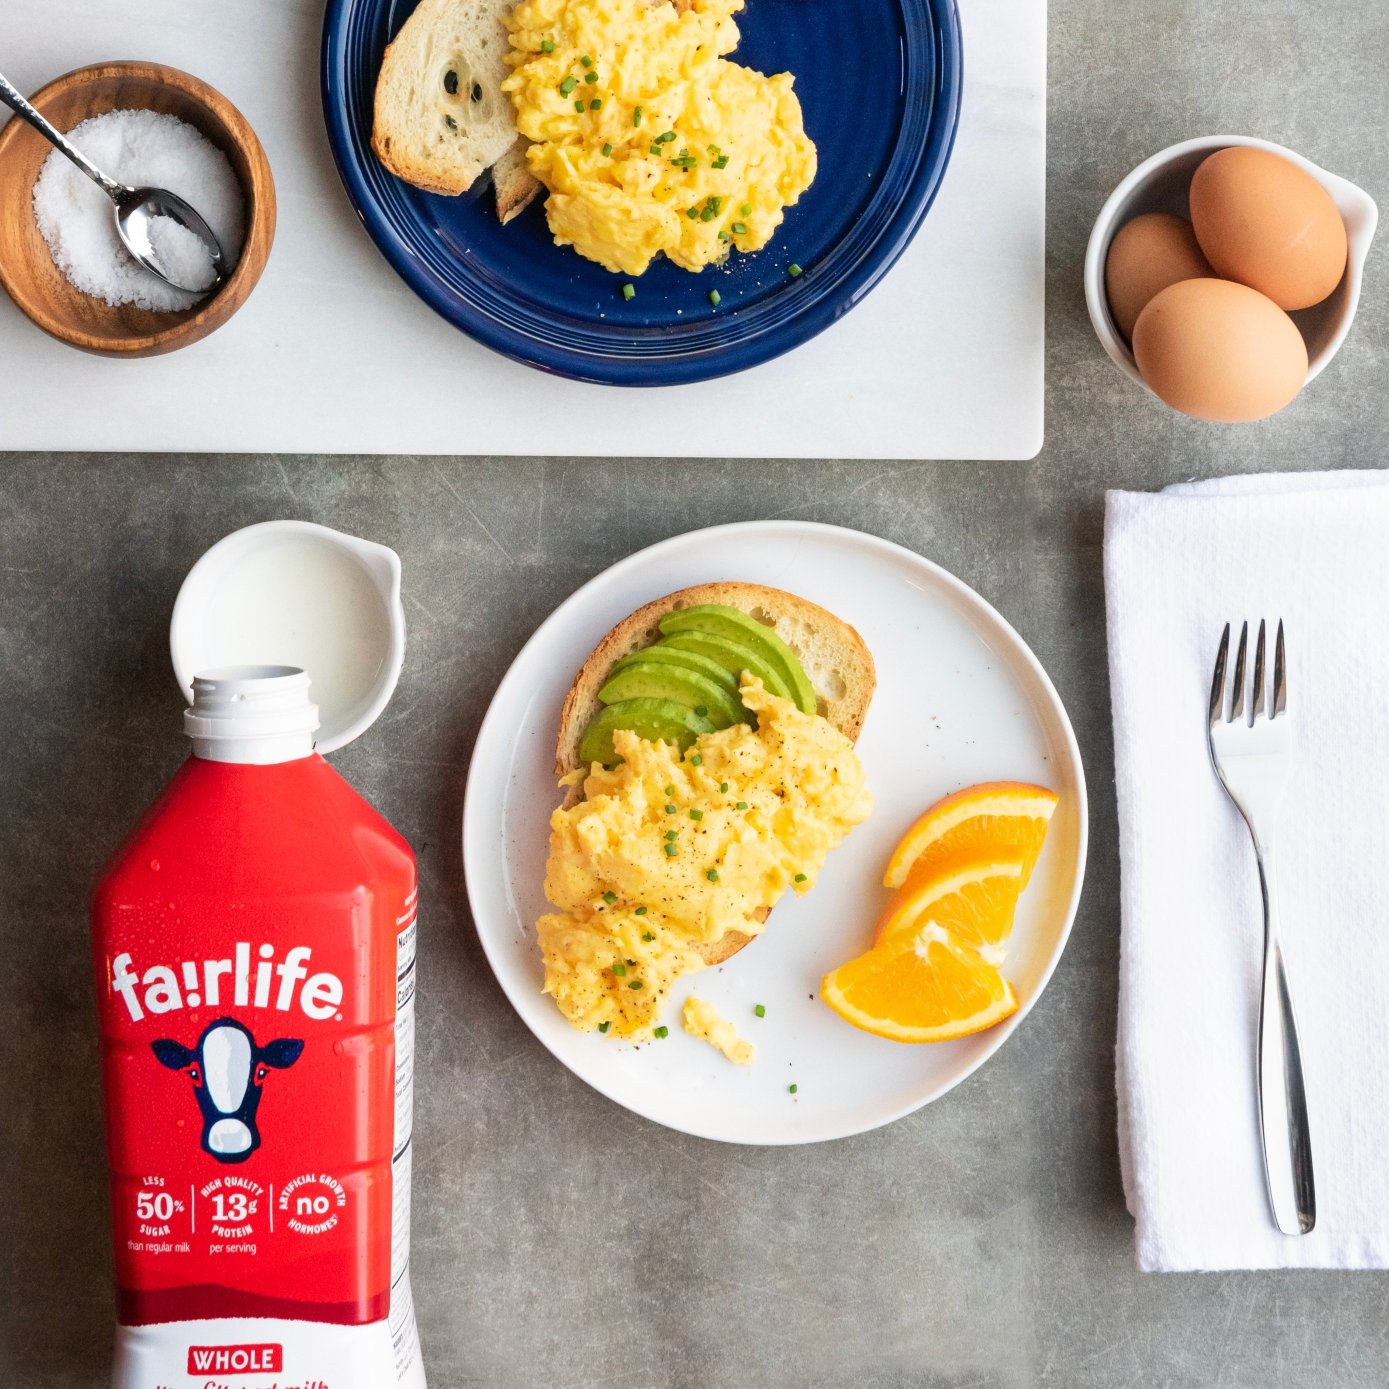 fairlife milk and breakfast pairing